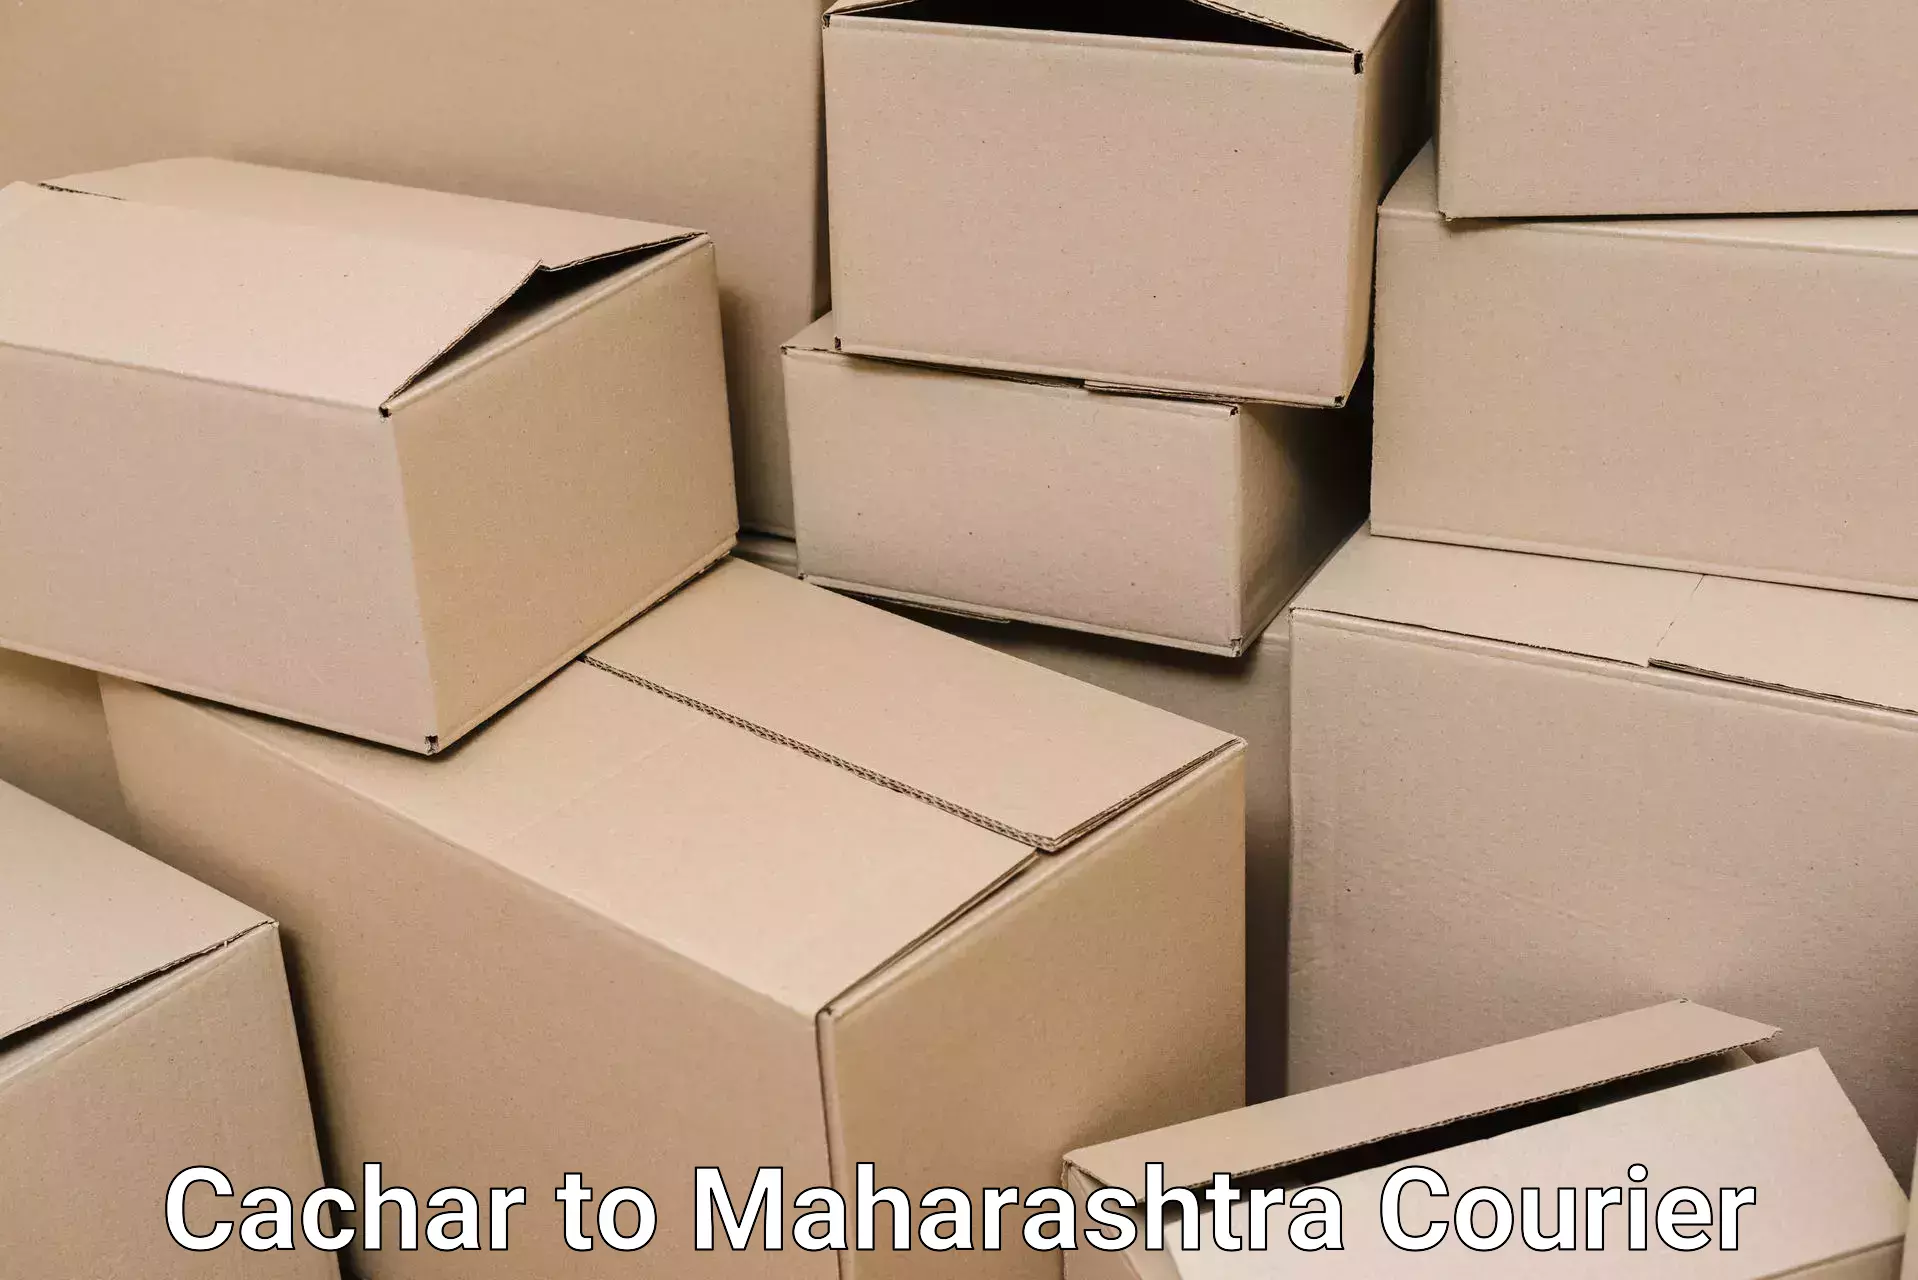 Quality moving and storage Cachar to IIT Mumbai